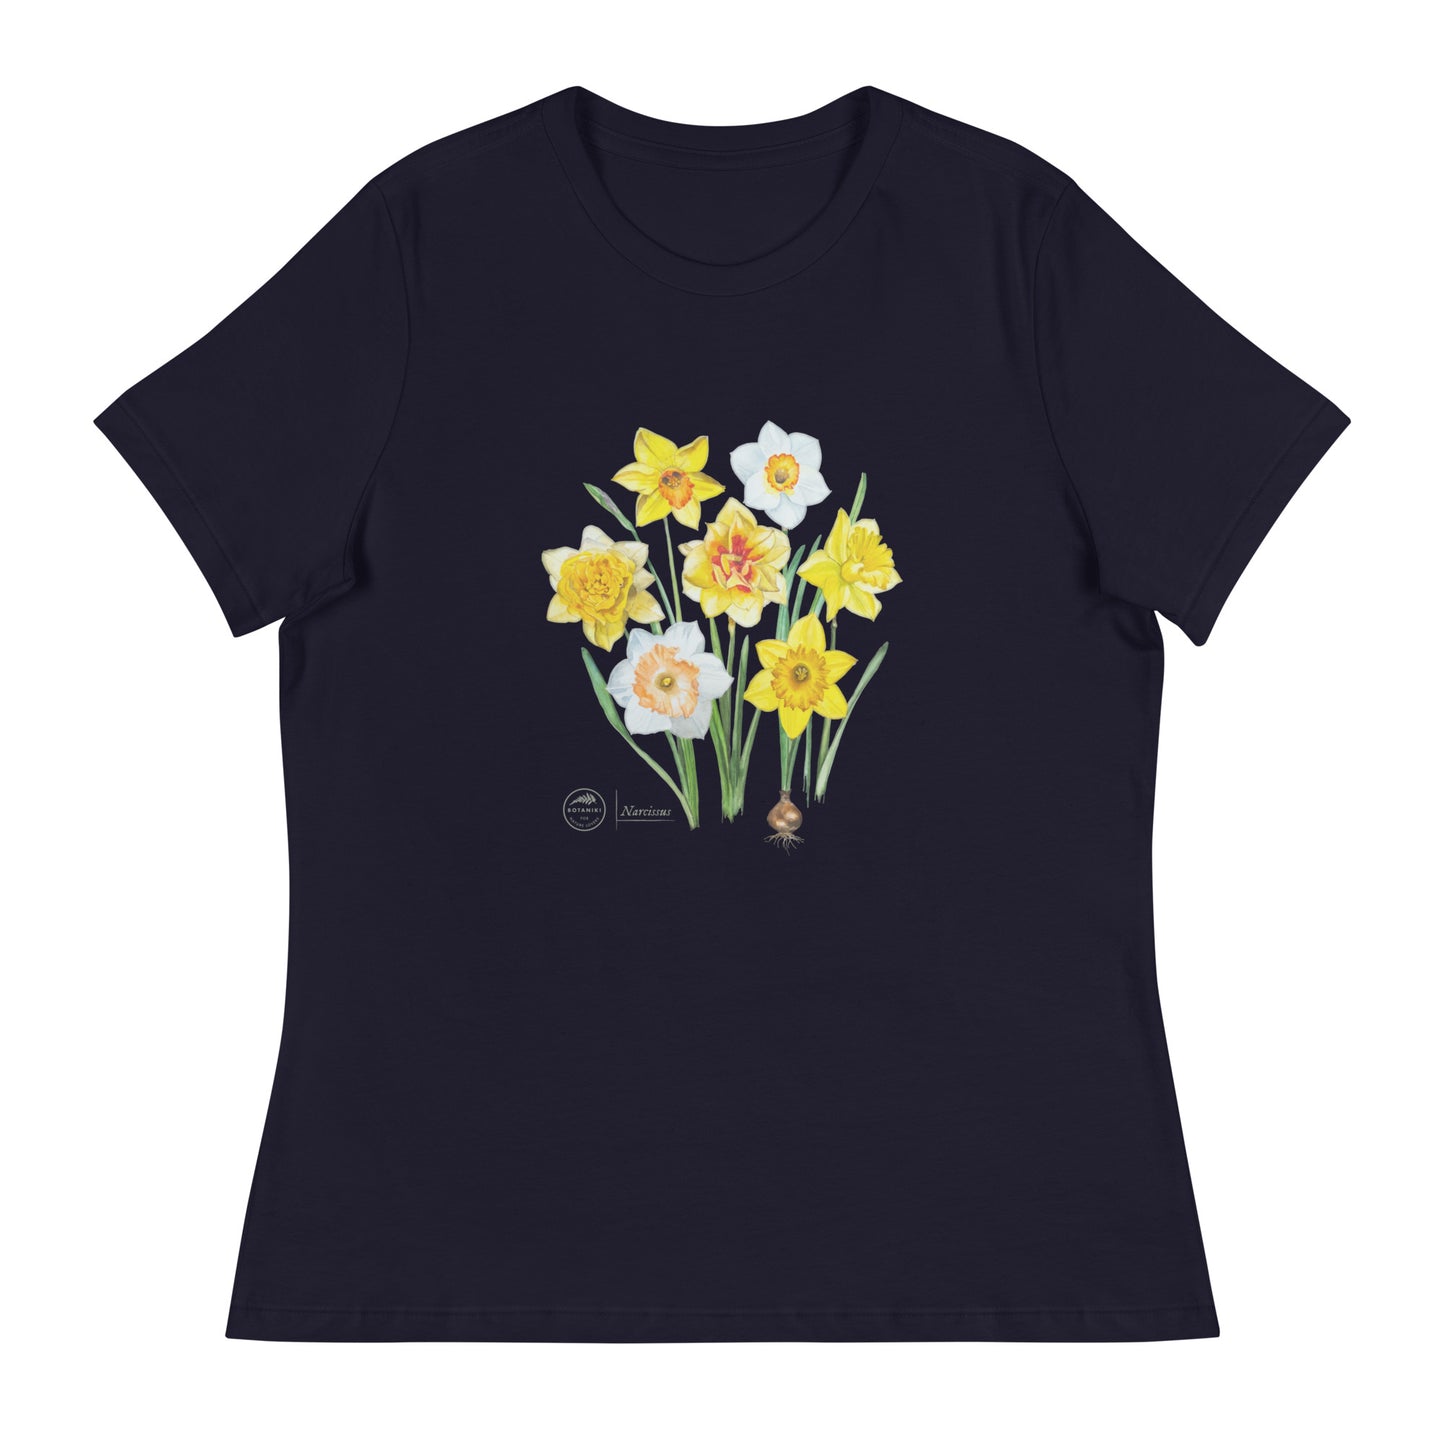 Women's Relaxed T-Shirt - Daffodils